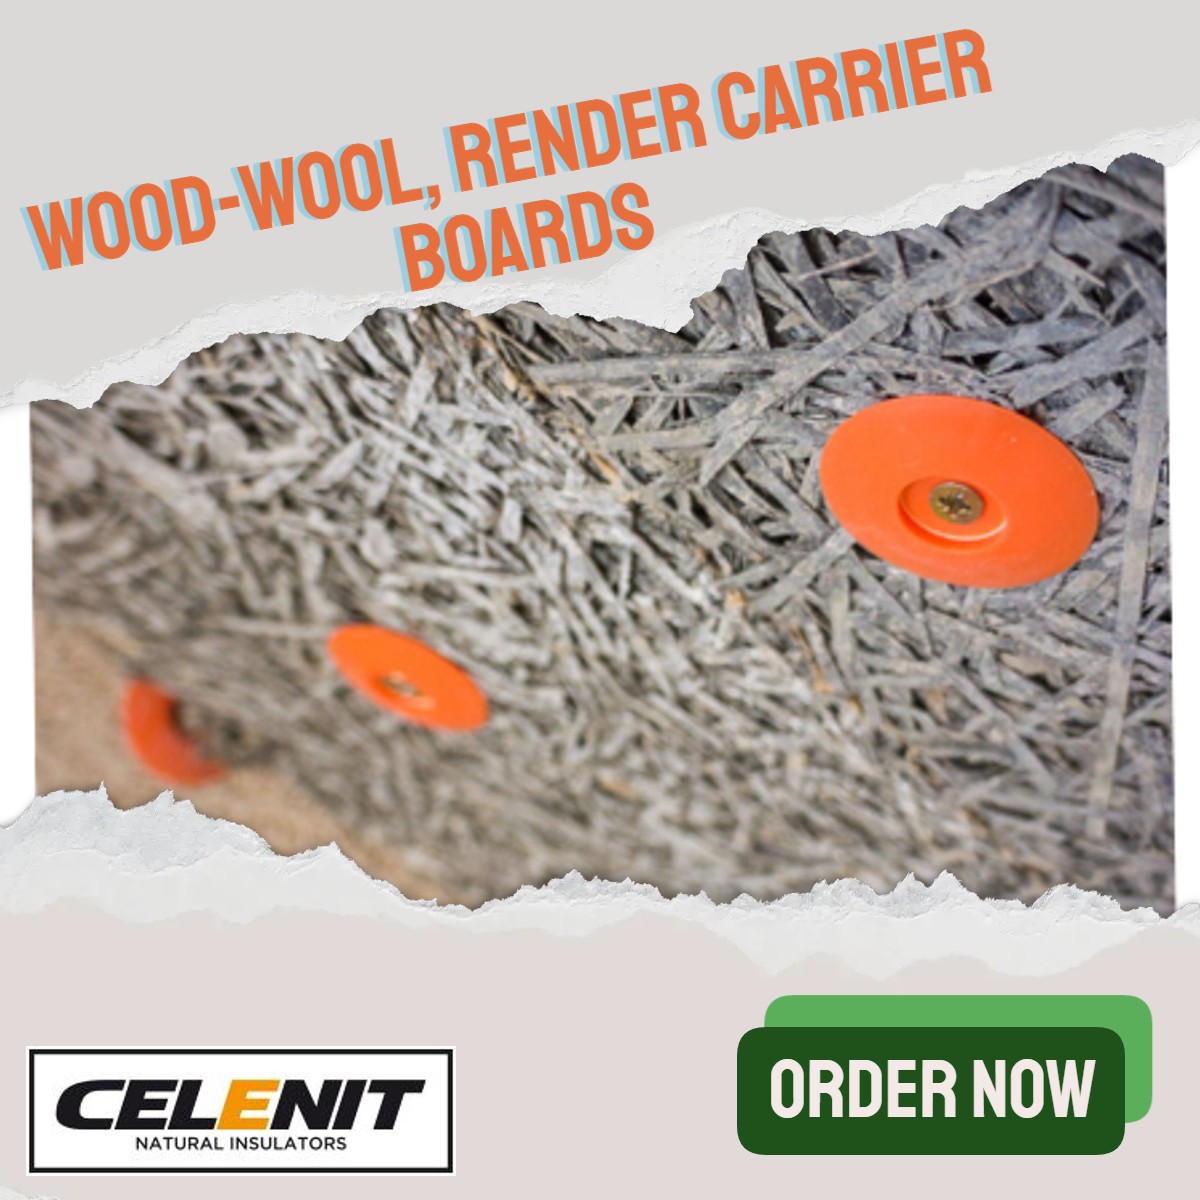 Celenit Wood-Wool, Render Carrier Boards